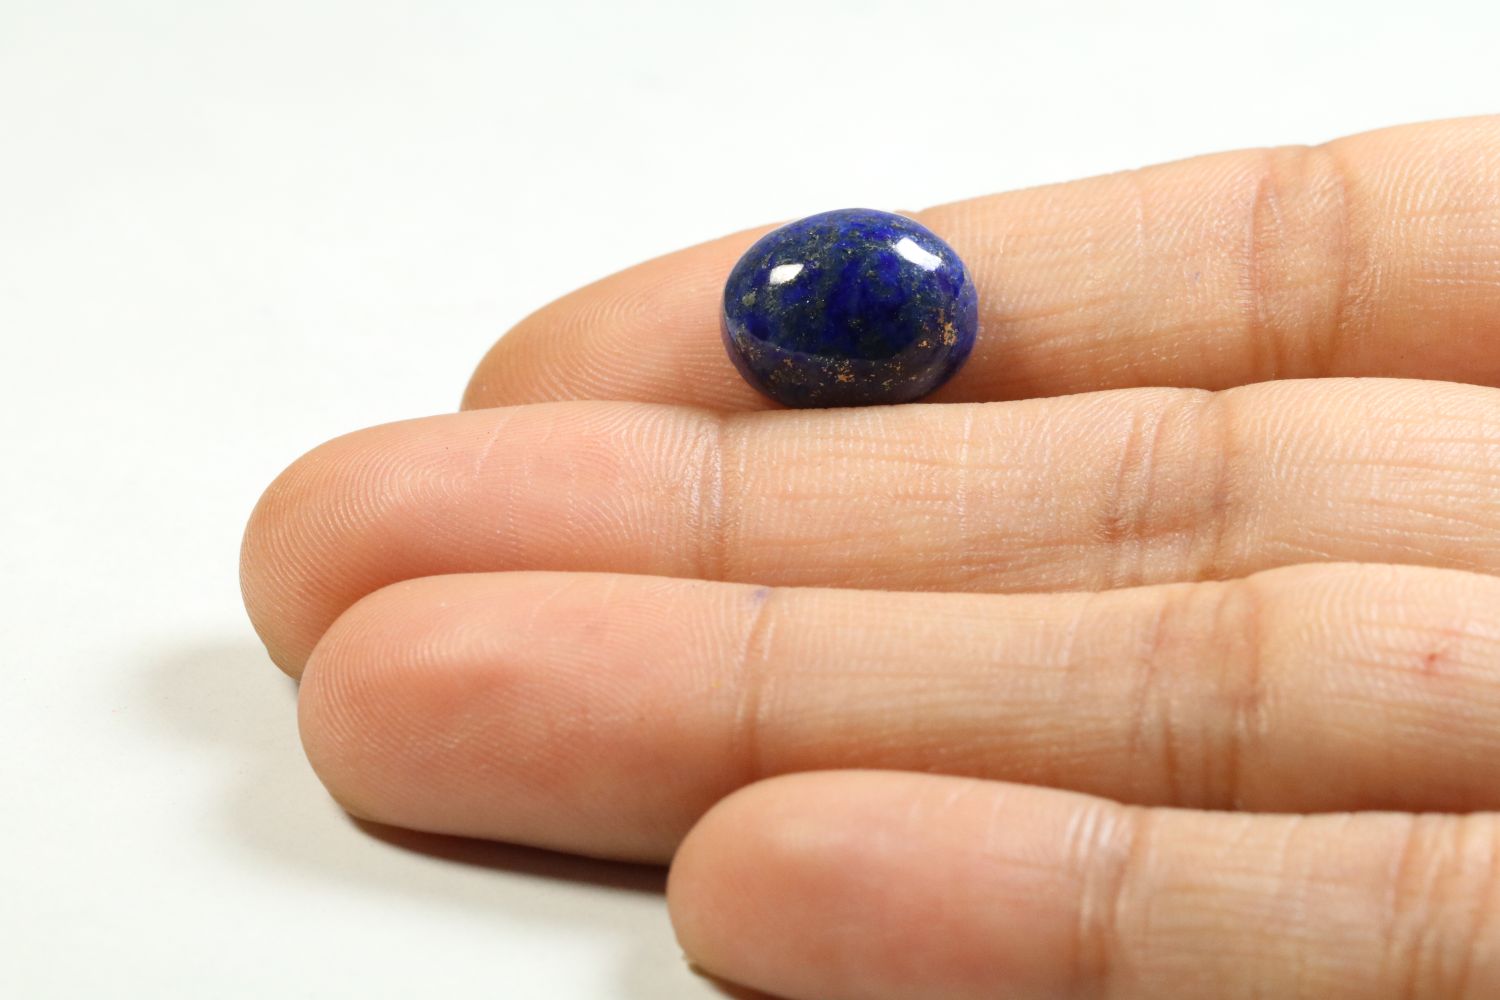 Lapis Lazuli 8.65 Ct.